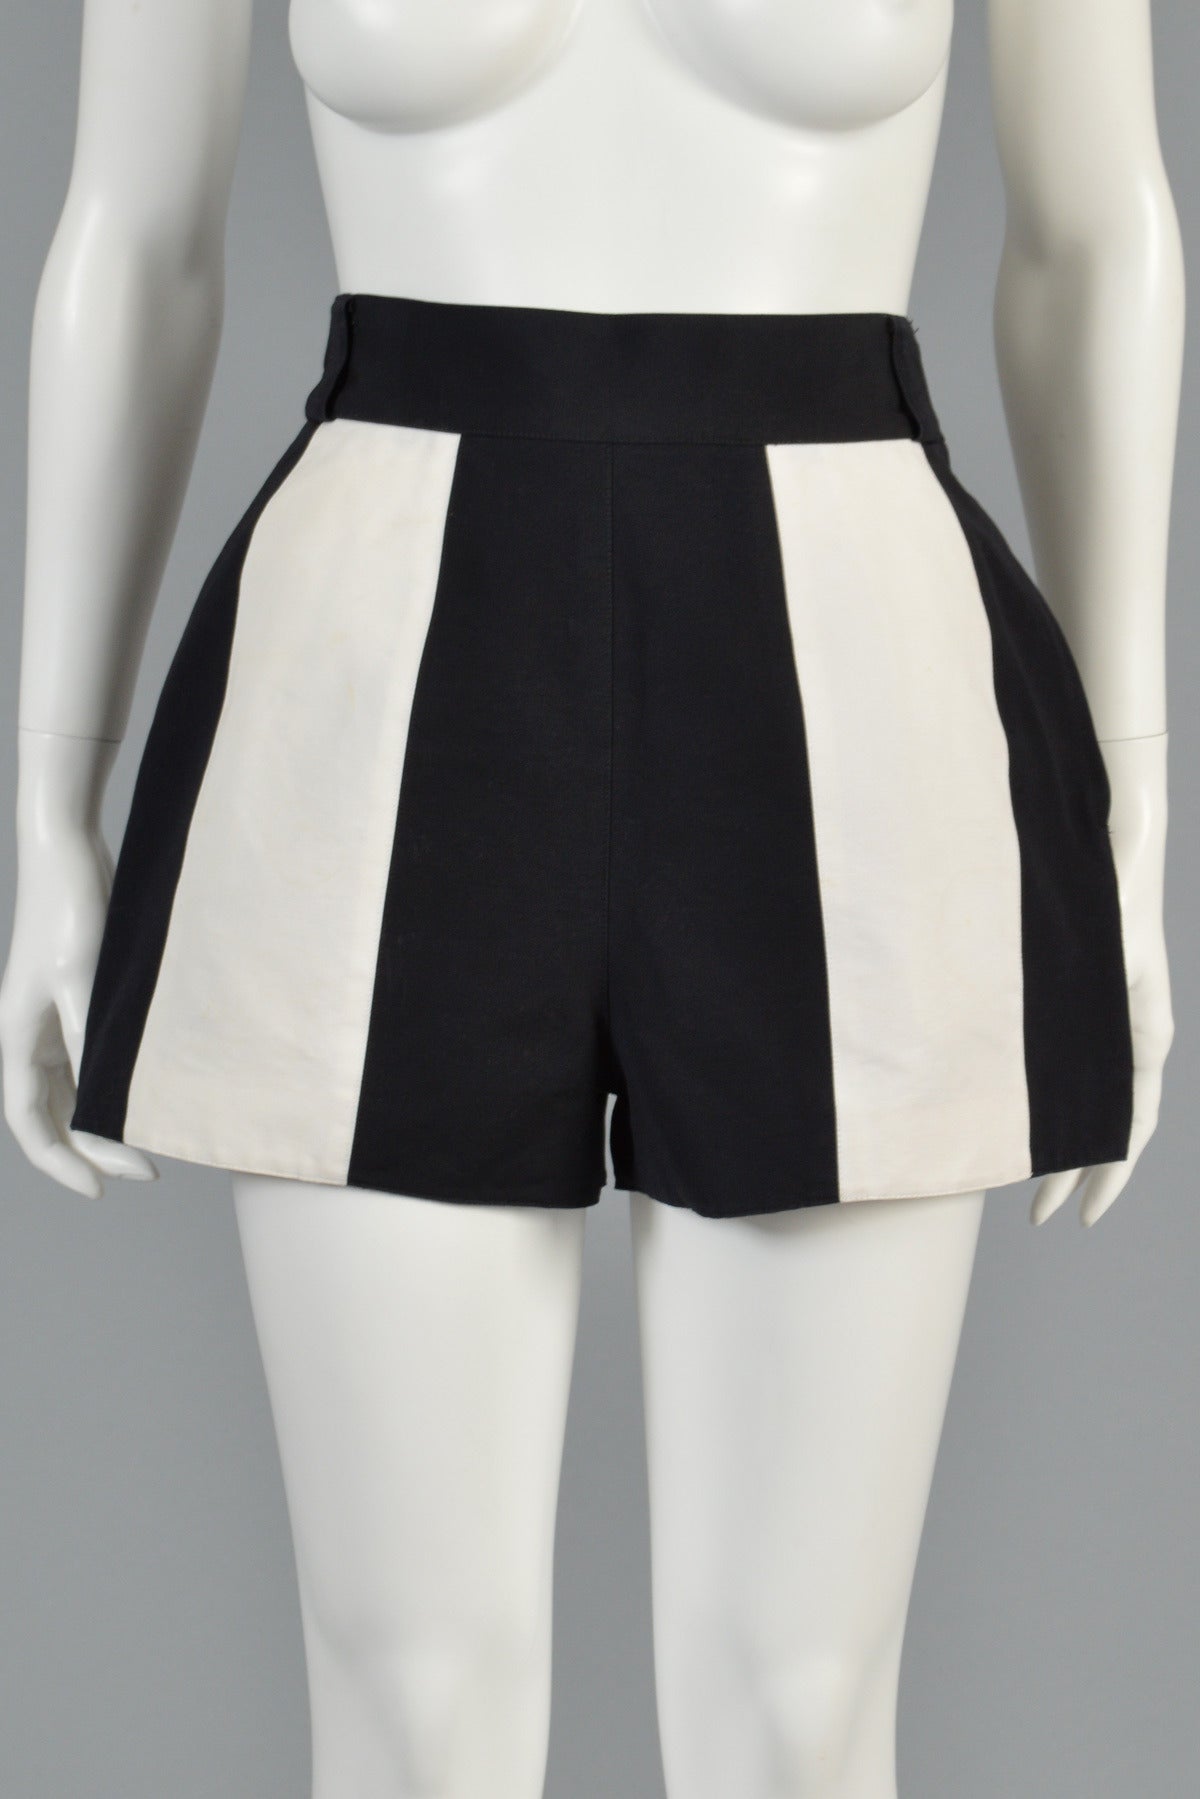 Women's Claude Montana Black + White Colorblock Shorts For Sale